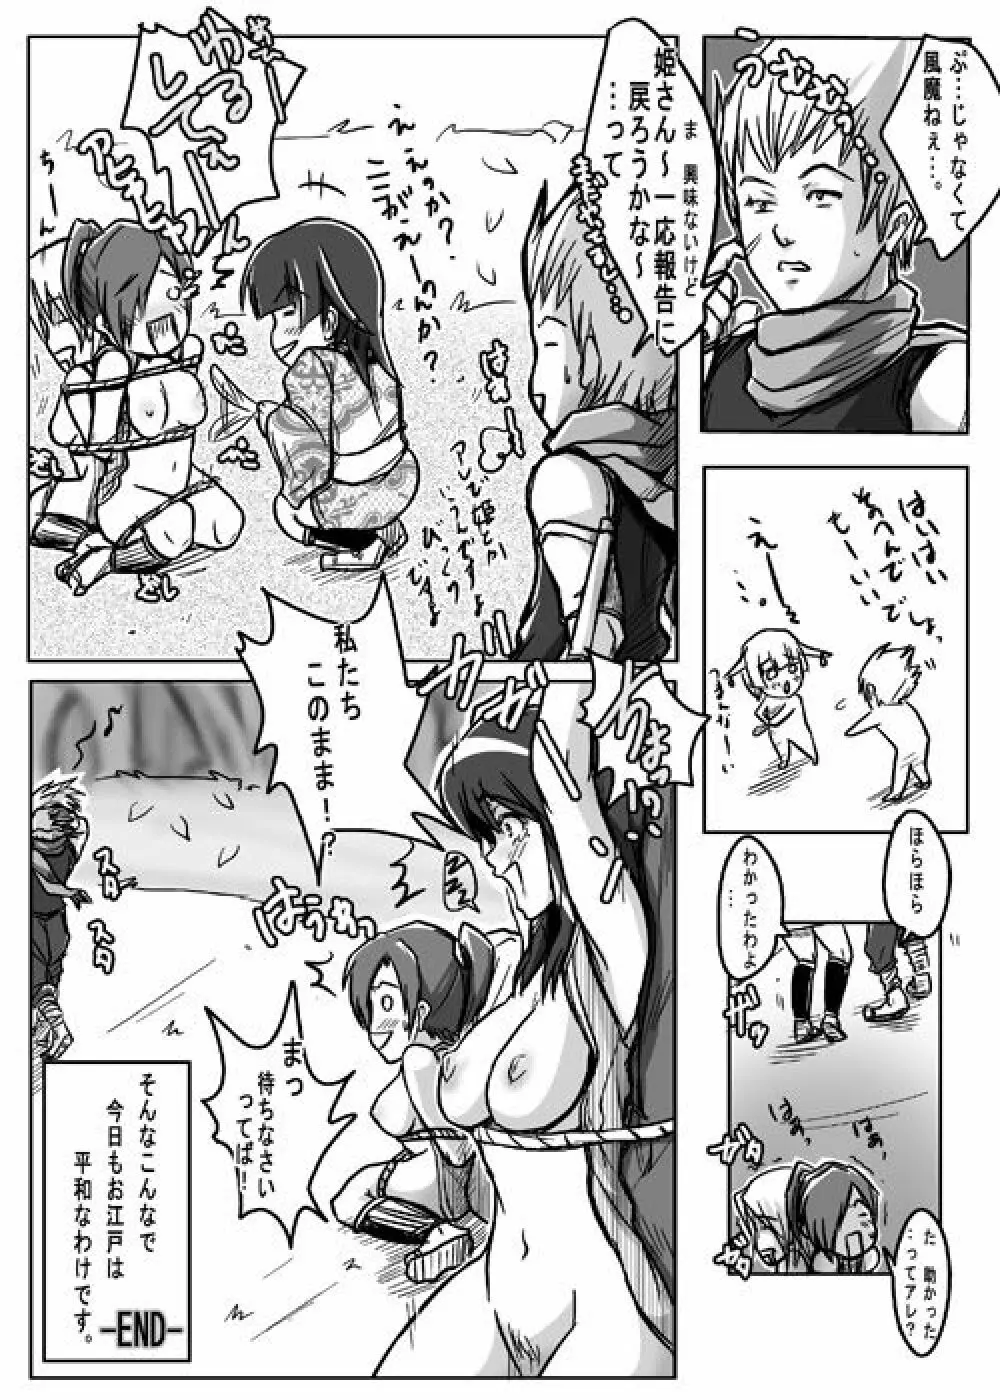 Same-themed manga about kid fighting female ninjas from japanese imageboard. 58ページ